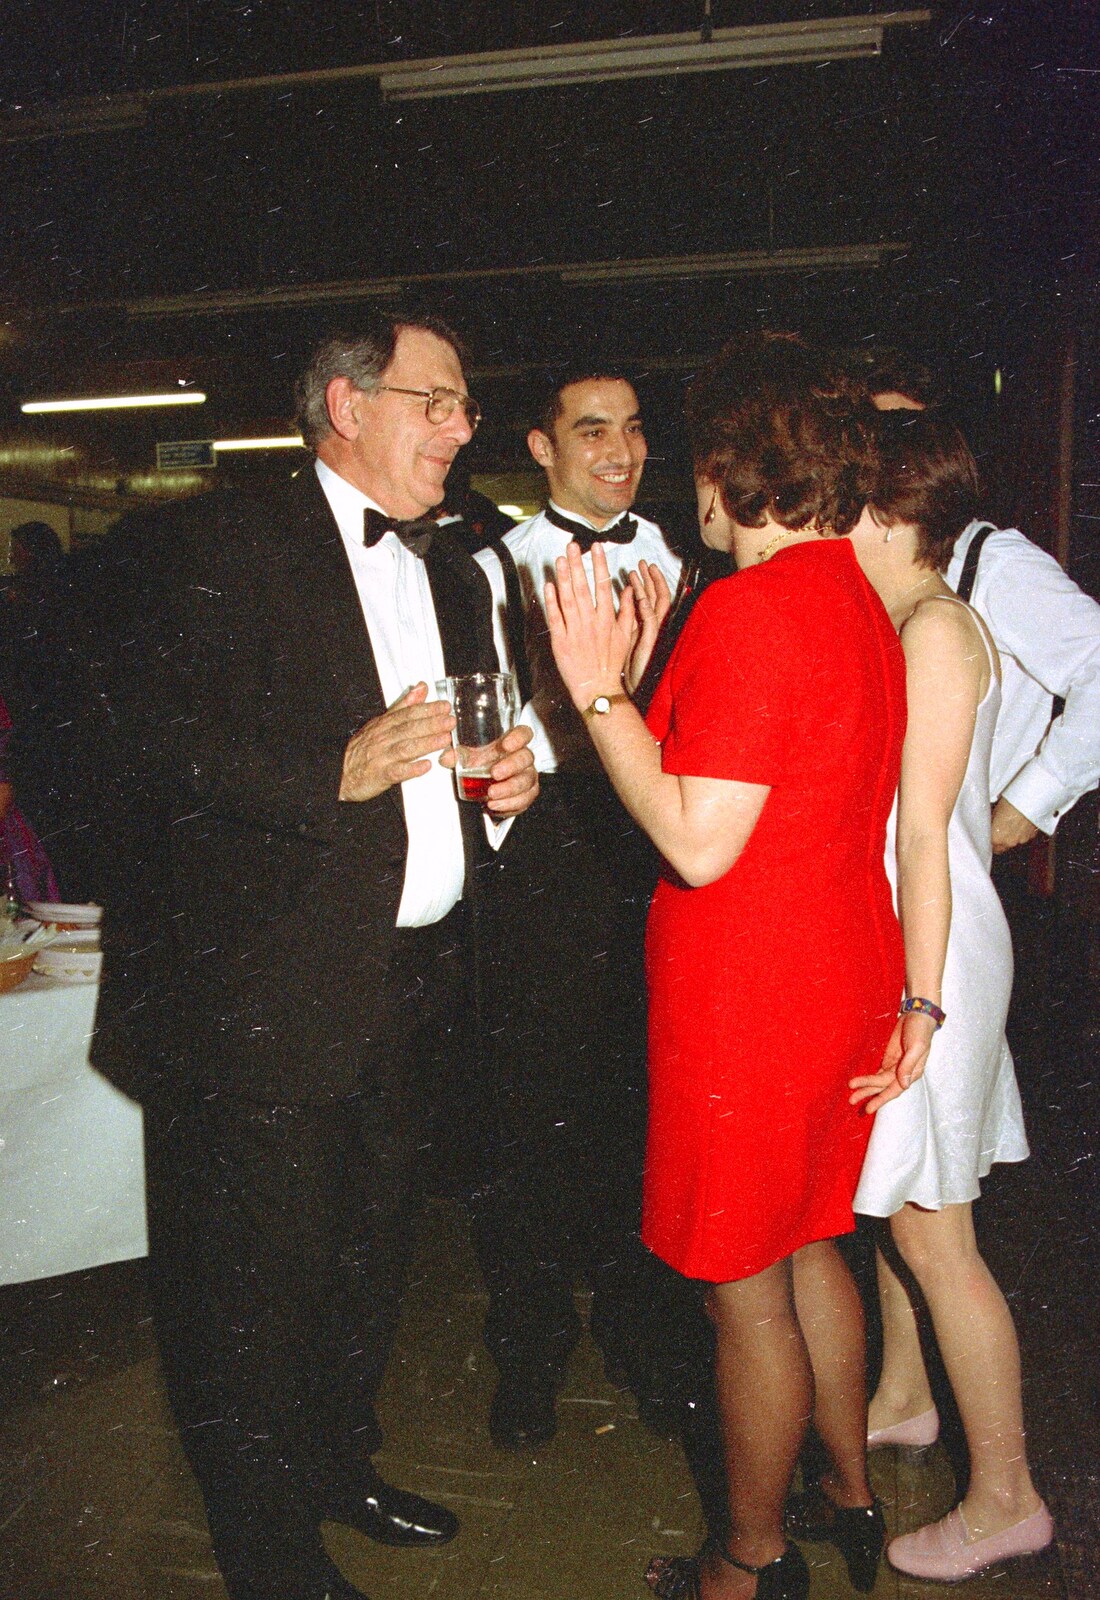 The Principal and Orhan from CISU at the Suffolk College May Ball, Ipswich, Suffolk - 11th May 1997